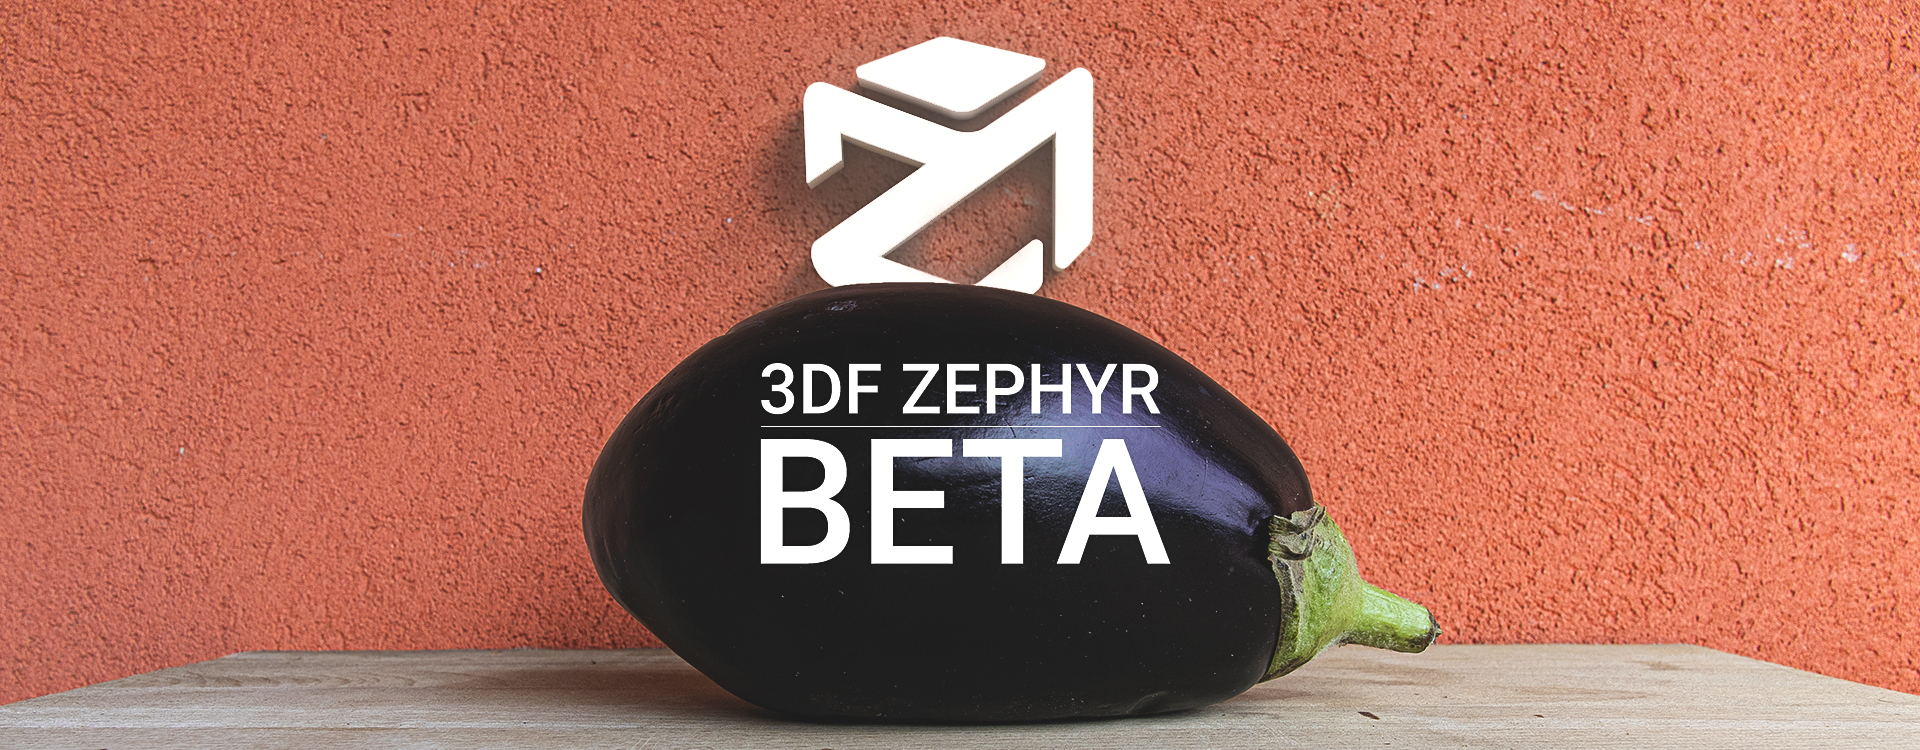 3df_zephyr_beta_6